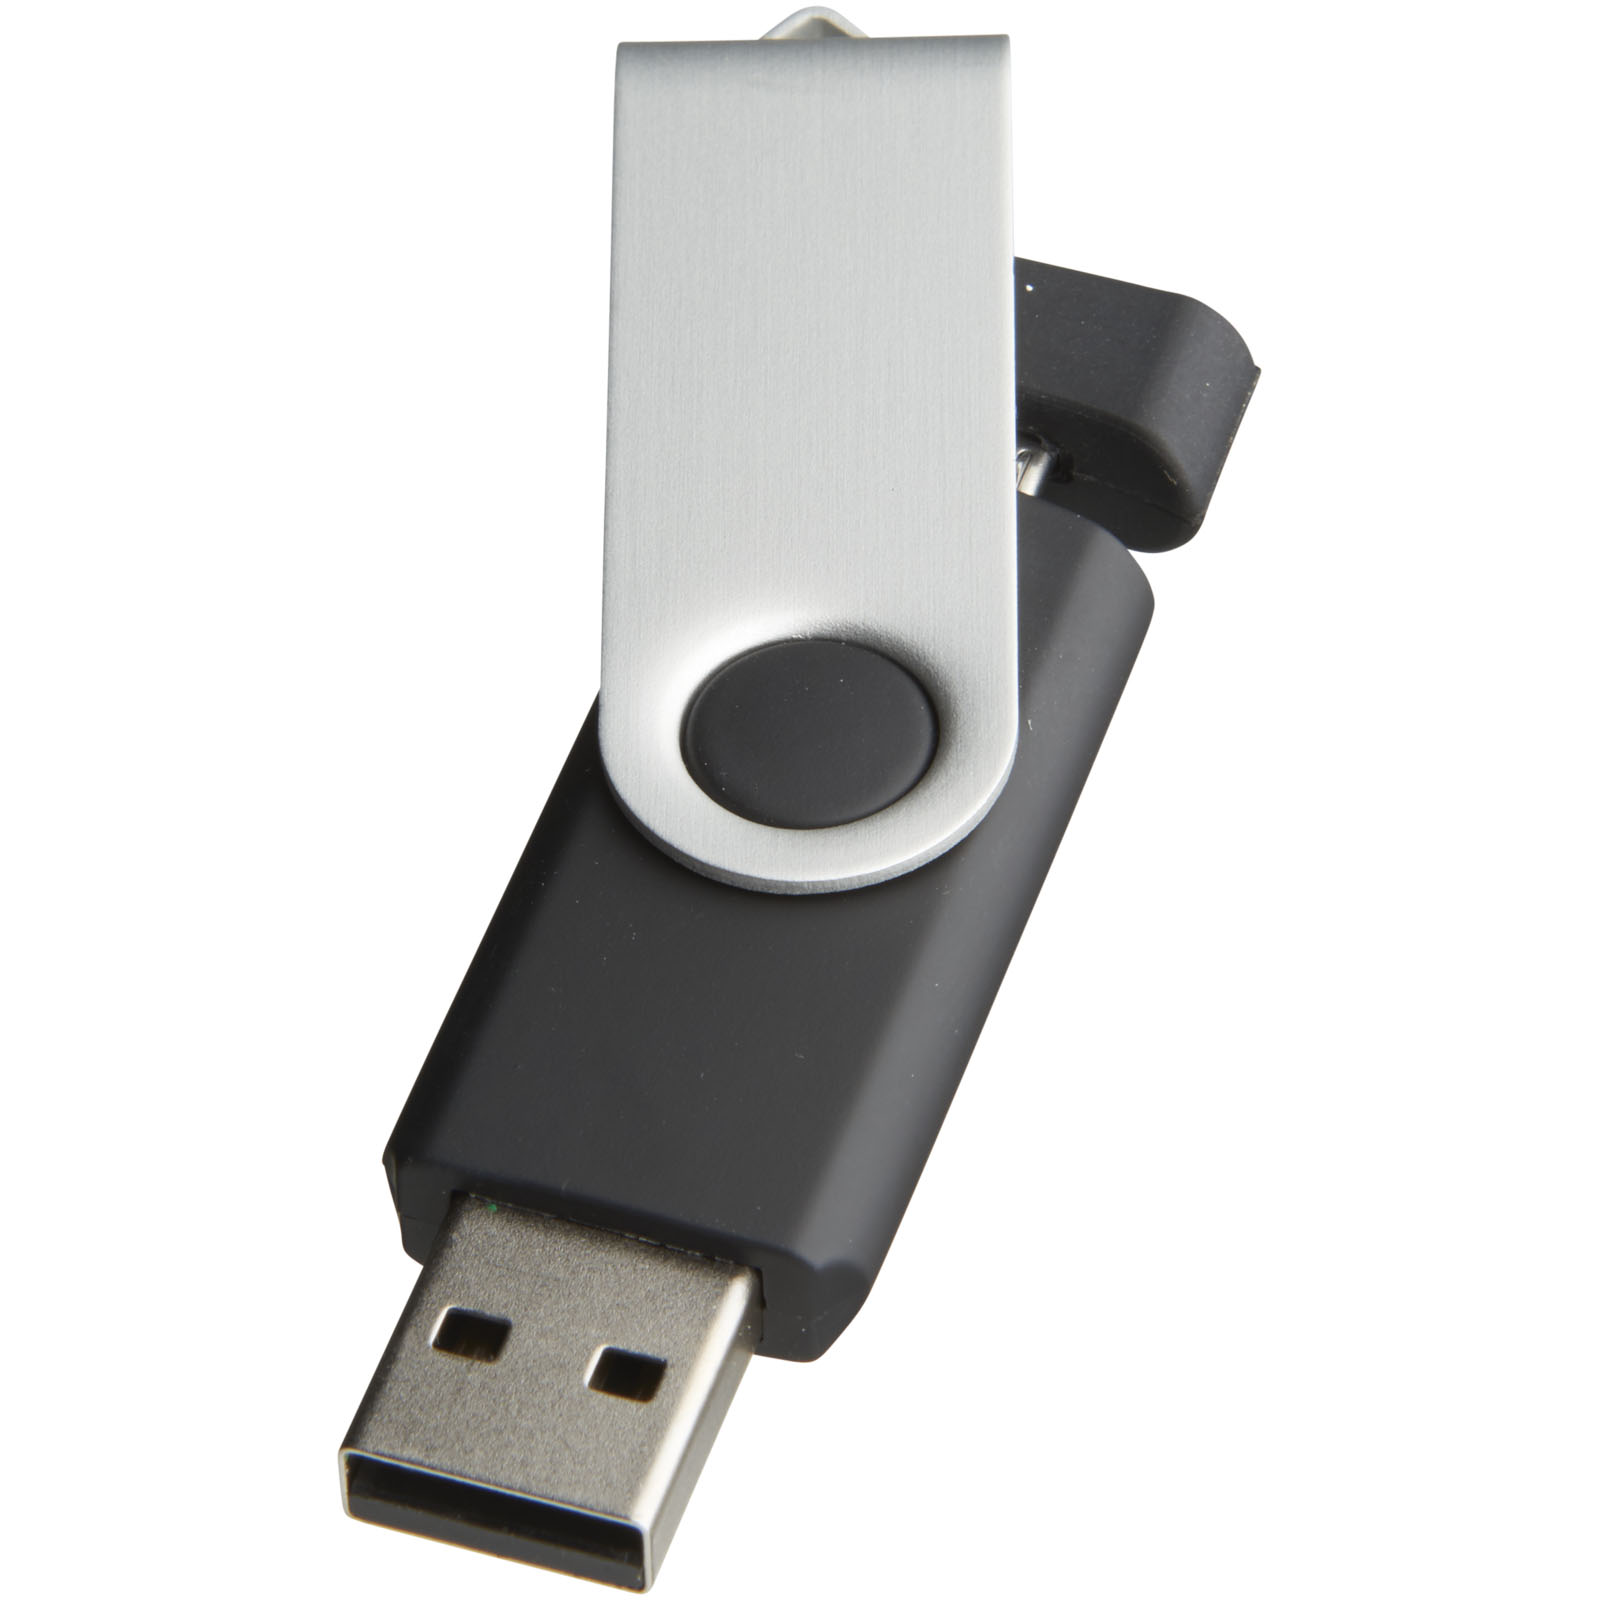 MobileSaver USB - Salzburg